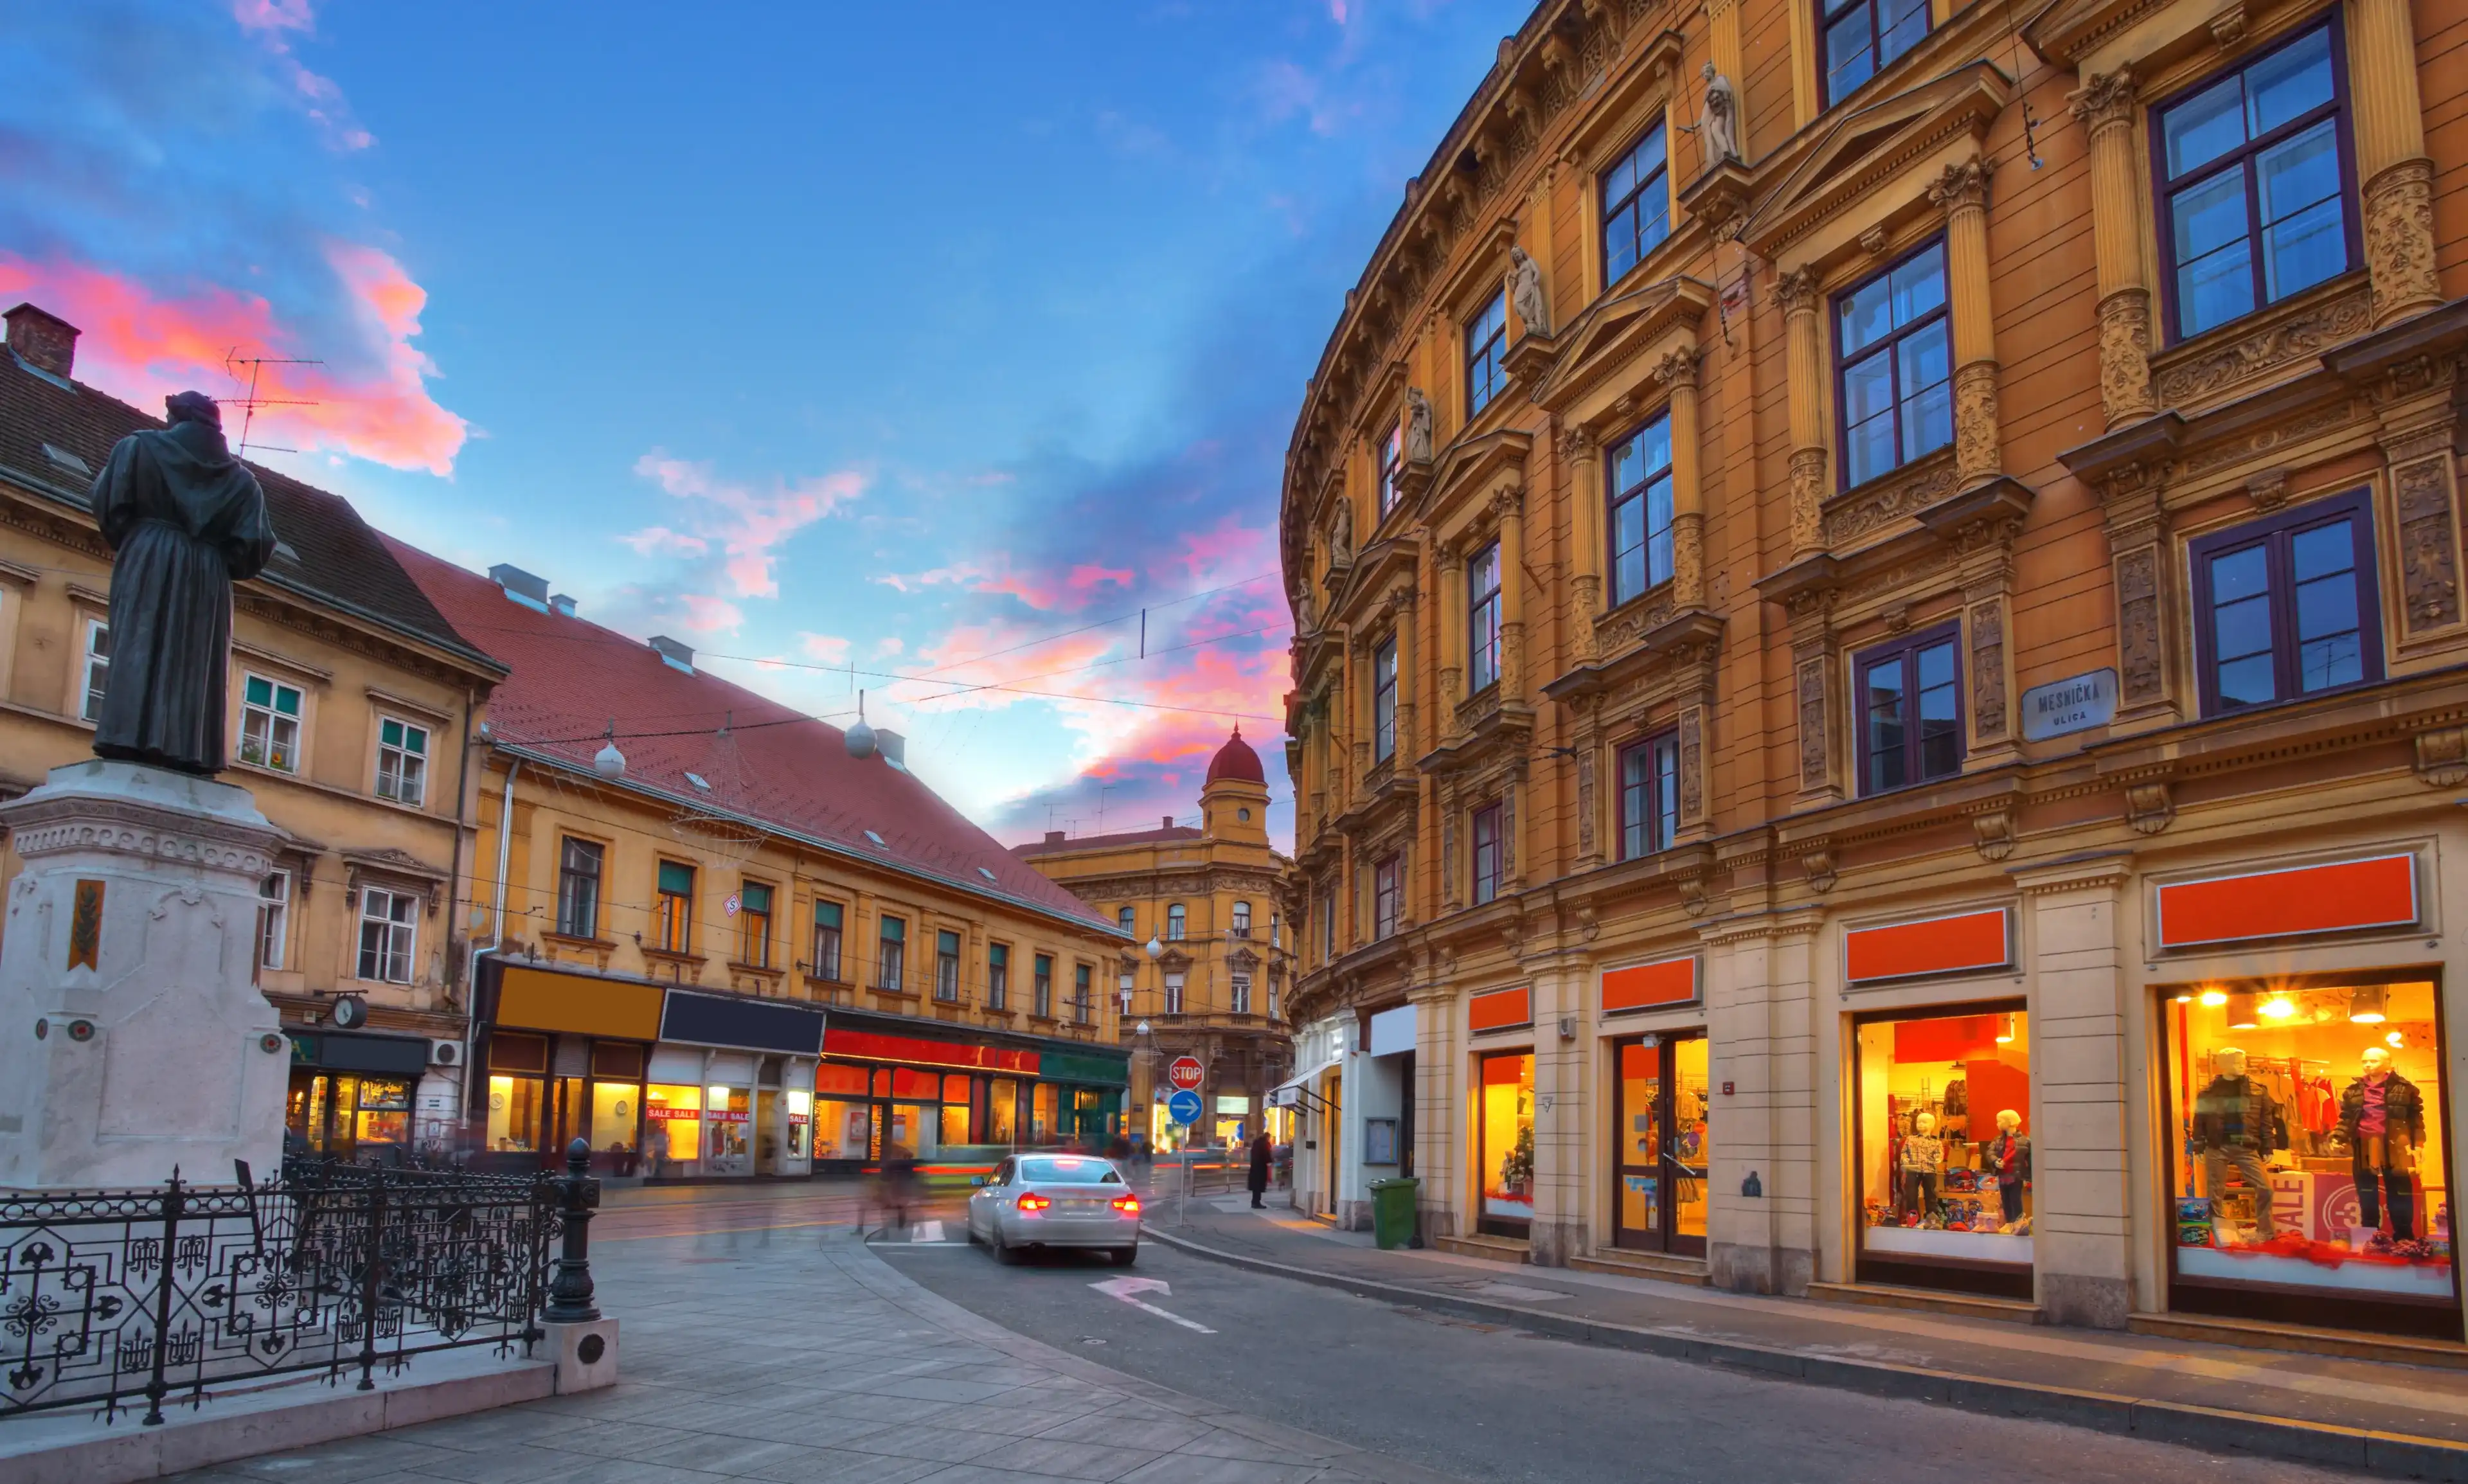 Best Zagreb hotels. Cheap hotels in Zagreb, Croatia